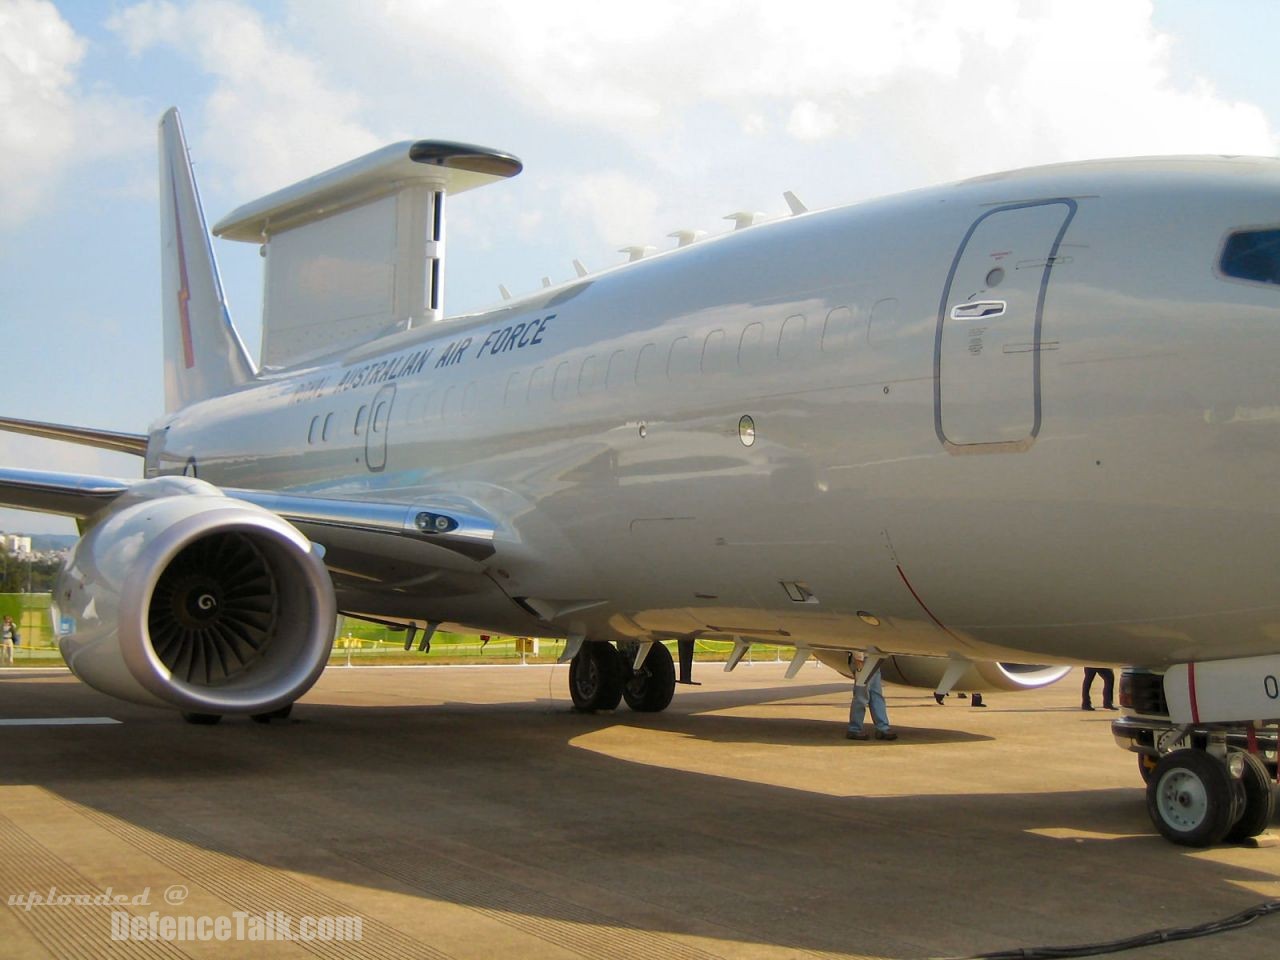 737-800 Wedgetail AWACS - Australia Airforce